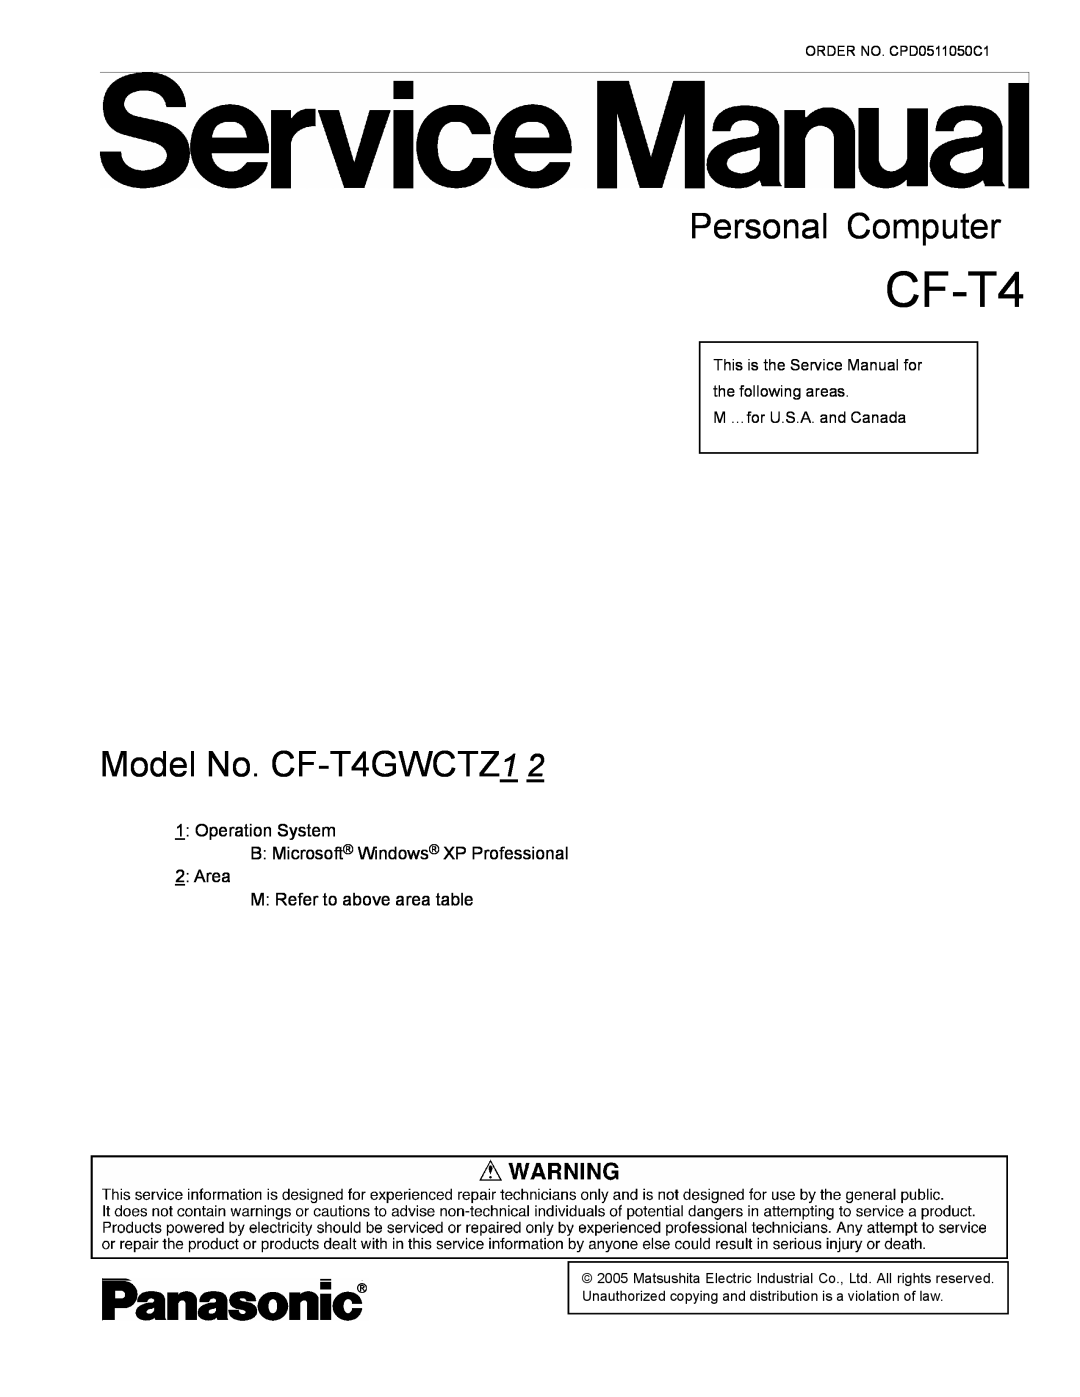 Matsushita CF-T4GWCTZ1 2 service manual Personal Computer, Model No. CF-T4GWCTZ1, ORDER NO. CPD0511050C1 